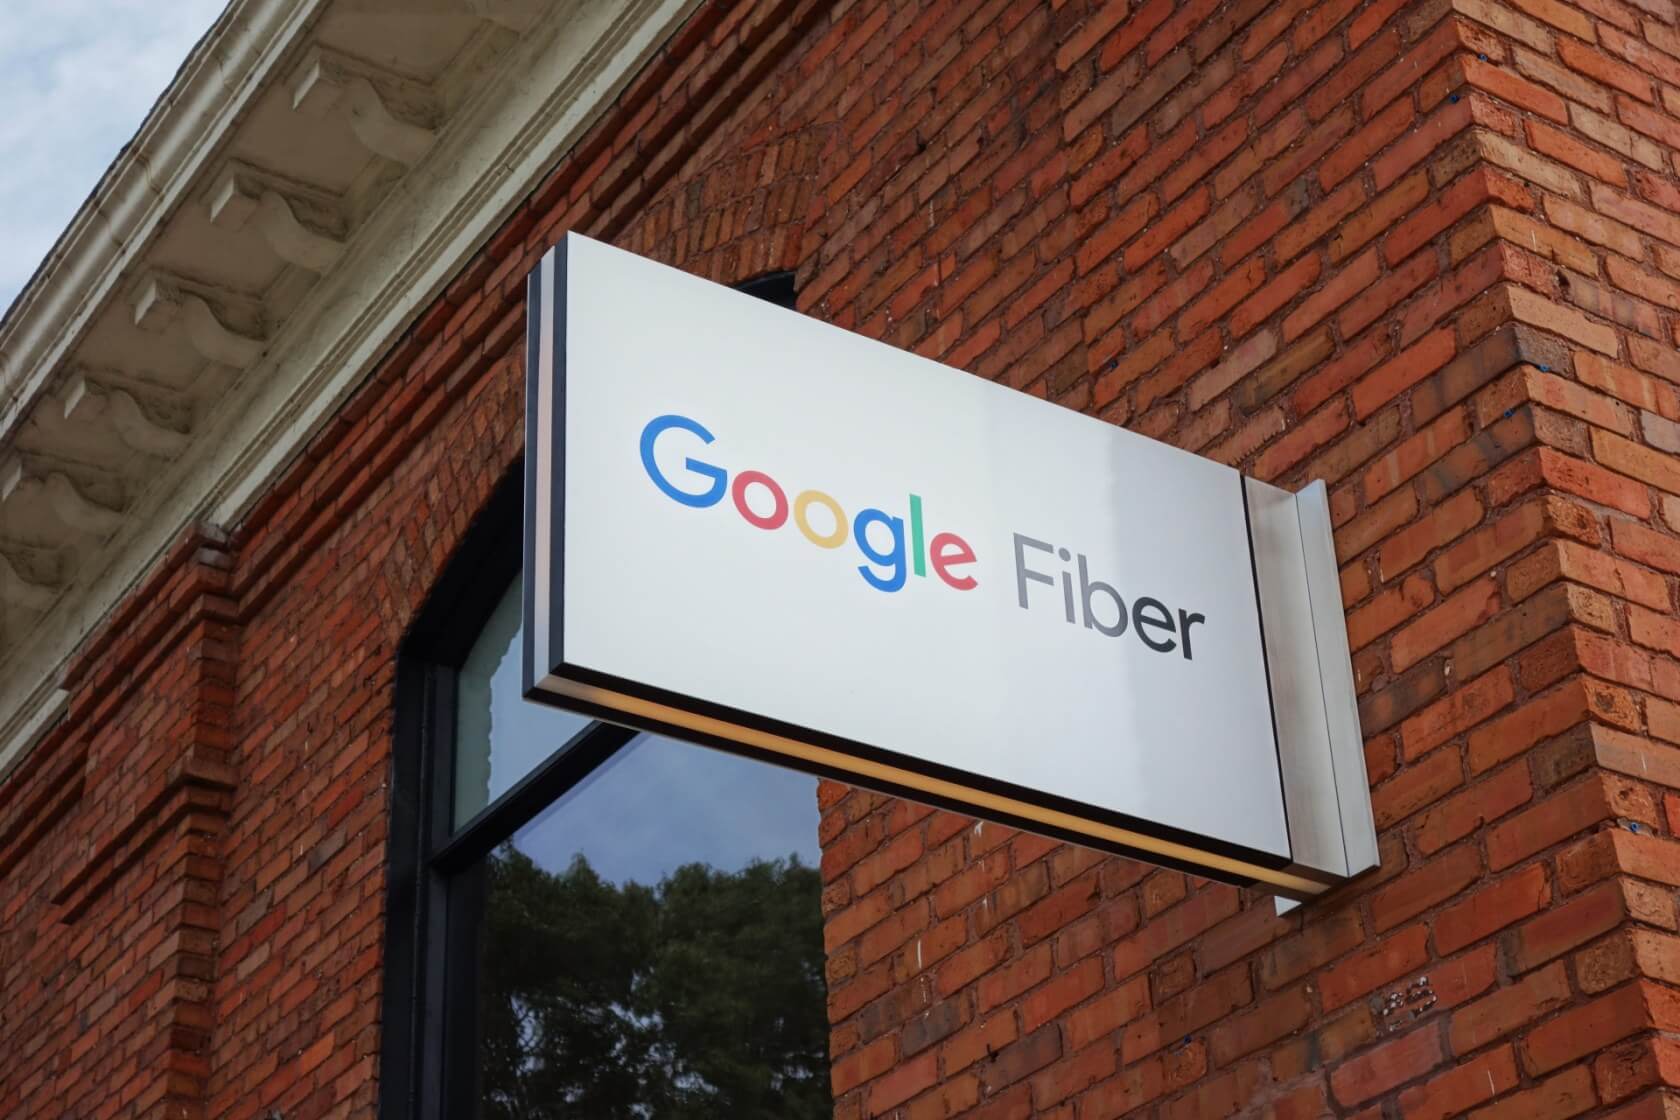 Google Fiber drops its cheaper 100Mbps internet plan, goes 'all in' on $70 gigabit subscription